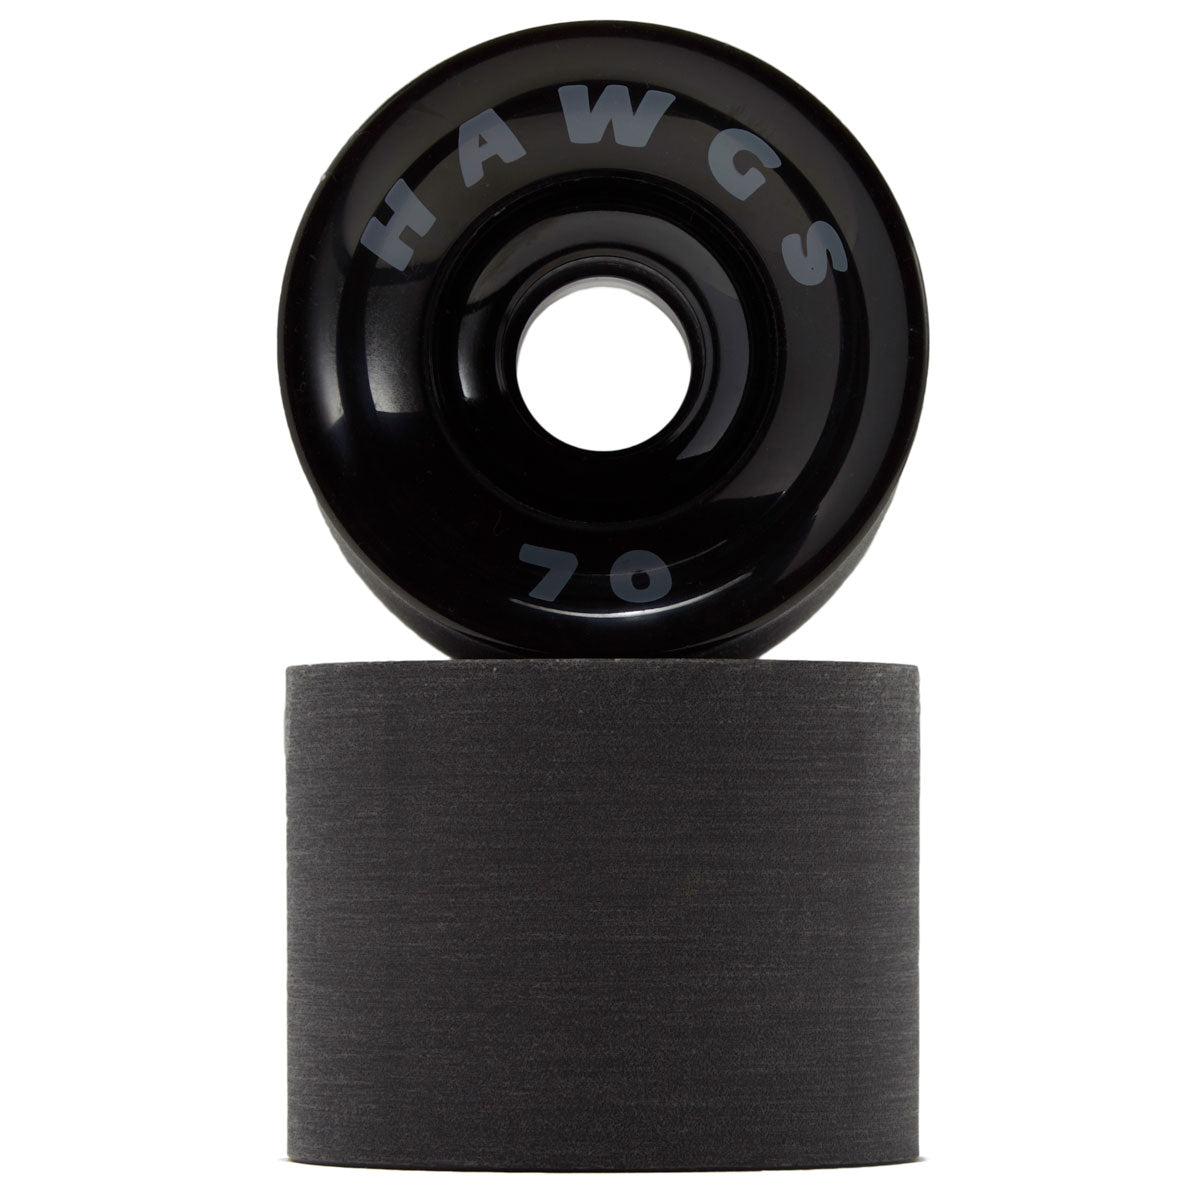 Hawgs Supreme 78a Stone Ground Longboard Wheels - Black - 70mm image 2